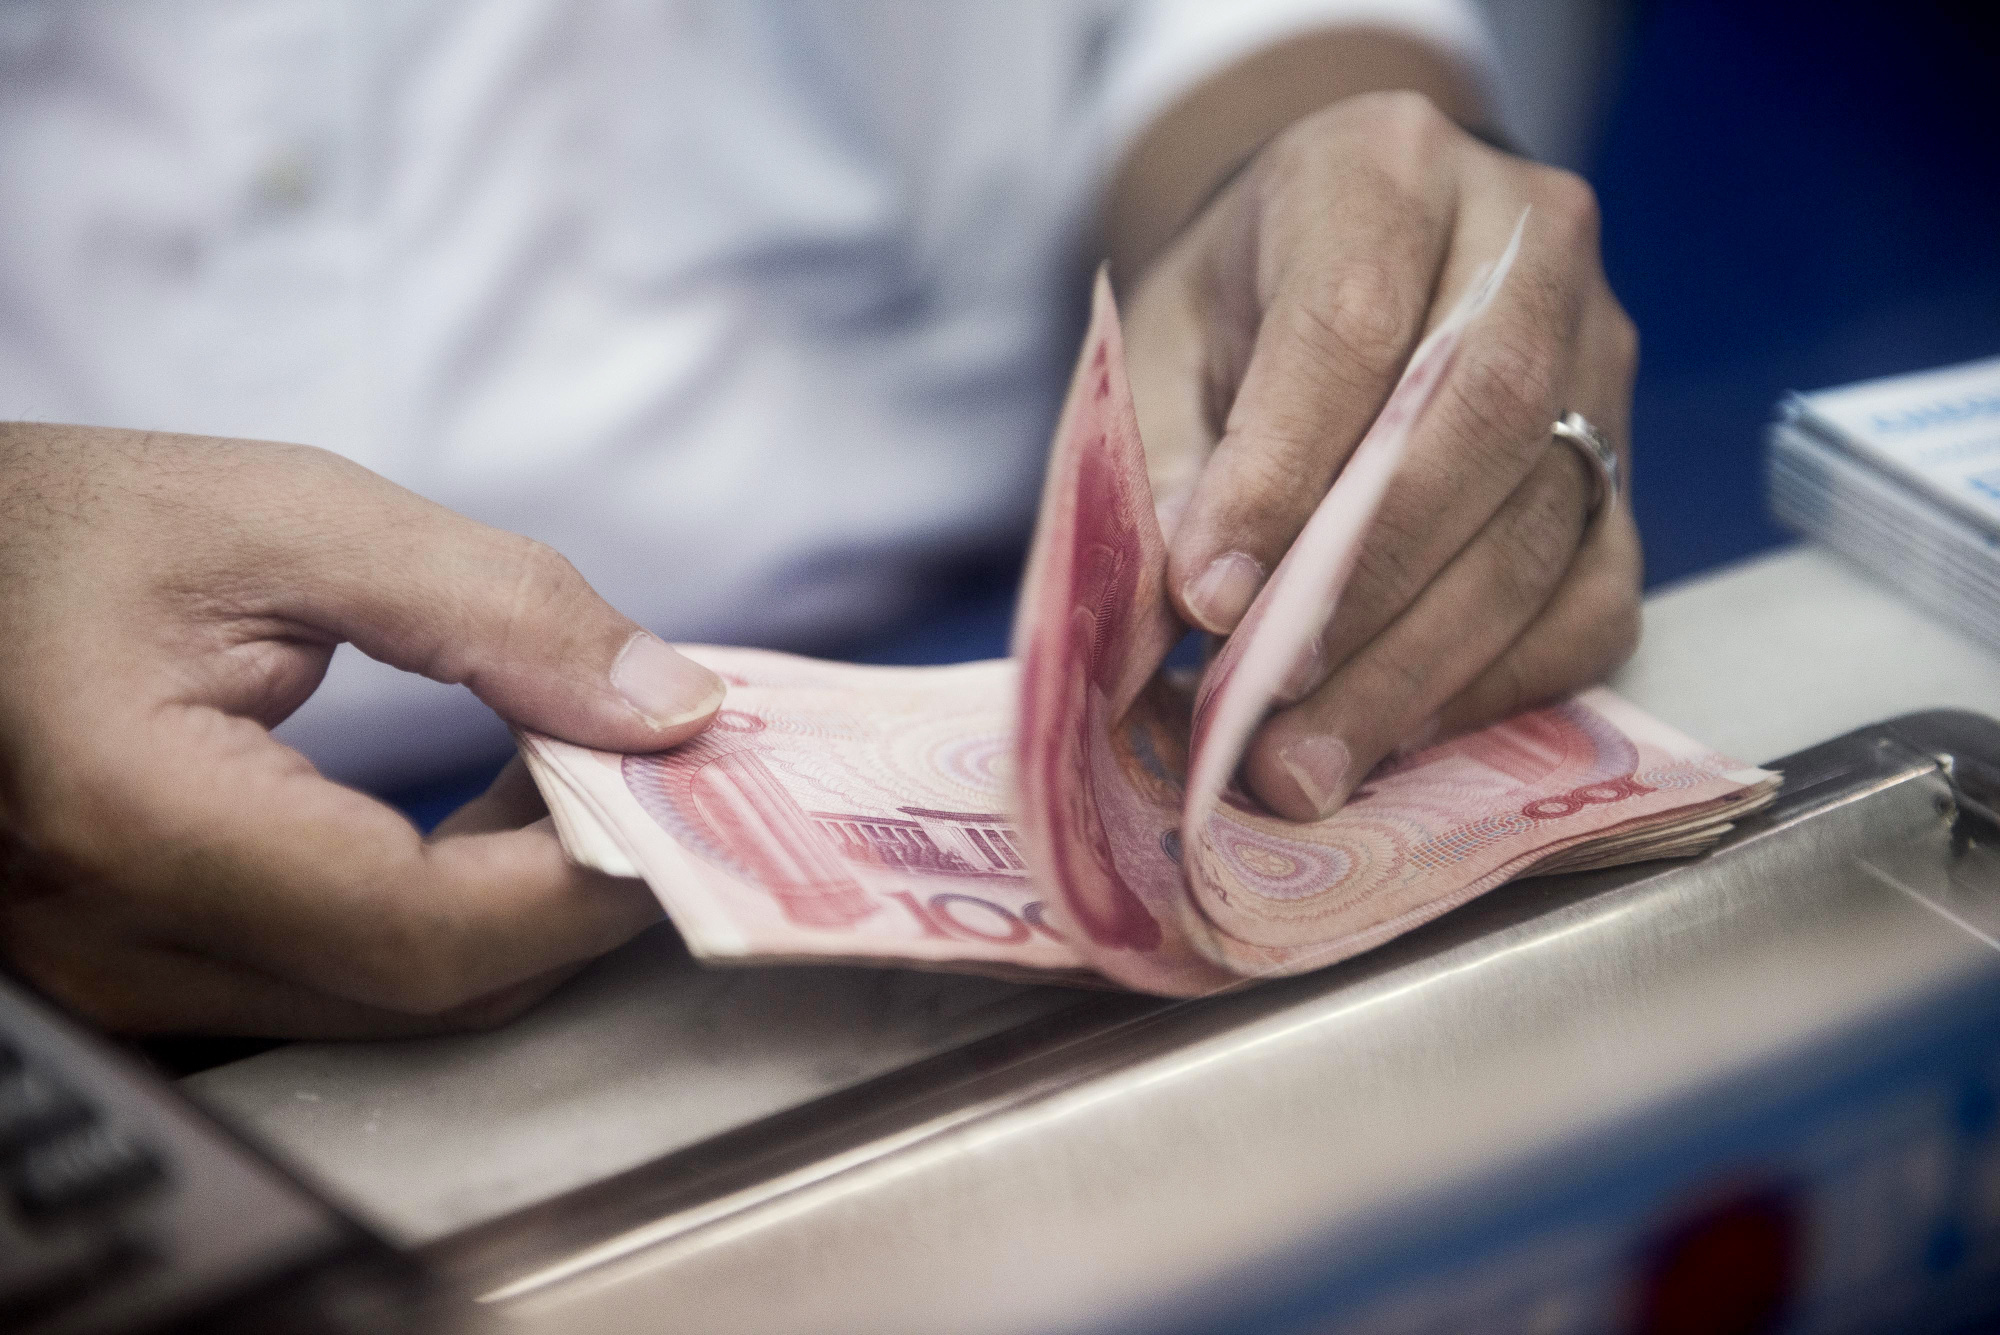 A person counts Chinese&nbsp;yuan banknotes in Hong Kong.&nbsp;